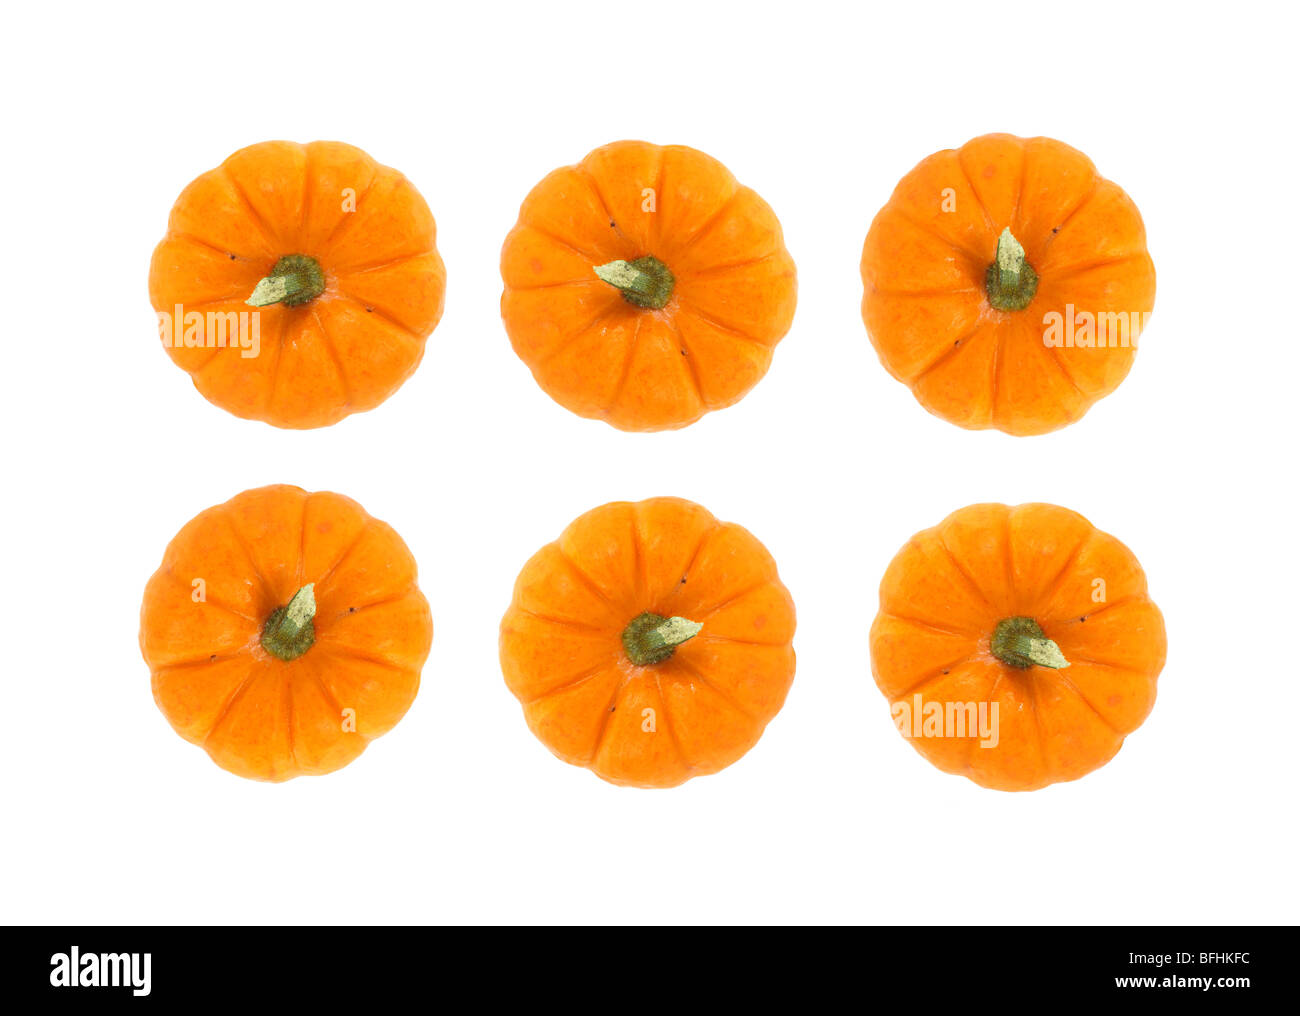 Small Thanksgiving pie pumpkins Stock Photo